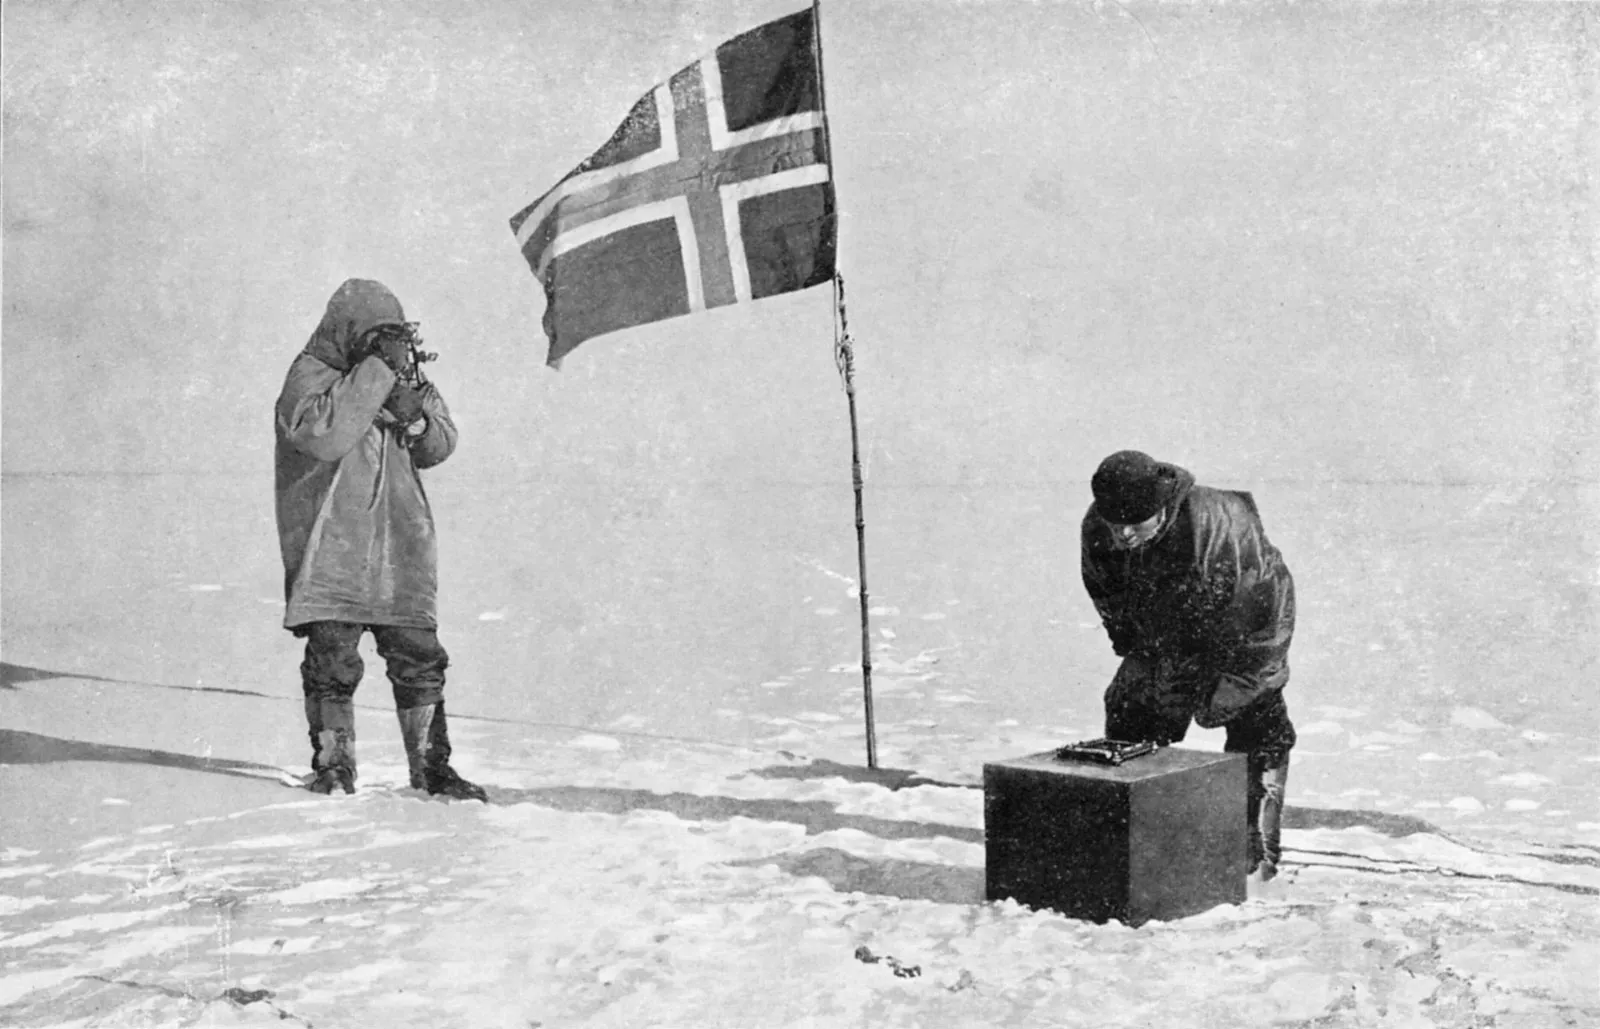 Roald-Engelbrecht-Gravning-Amundsen-Norwegian-explorer-South-Pole-1911